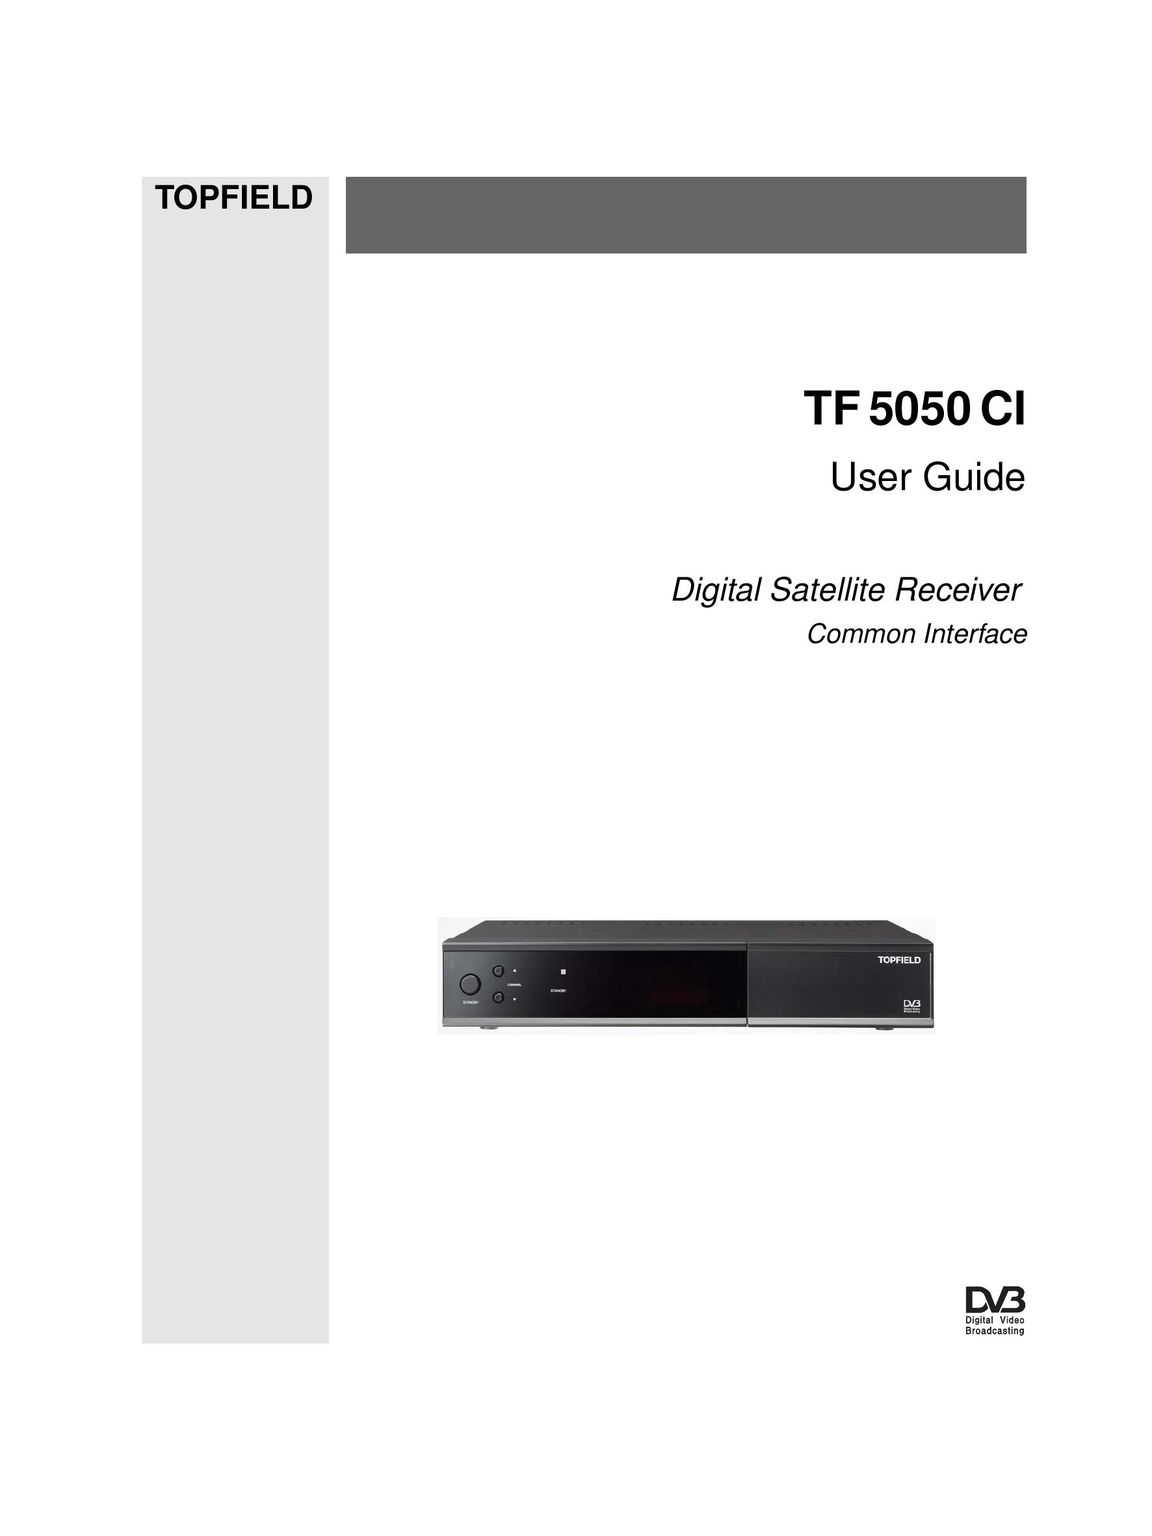 Topfield TF 5050 CI Satellite TV System User Manual